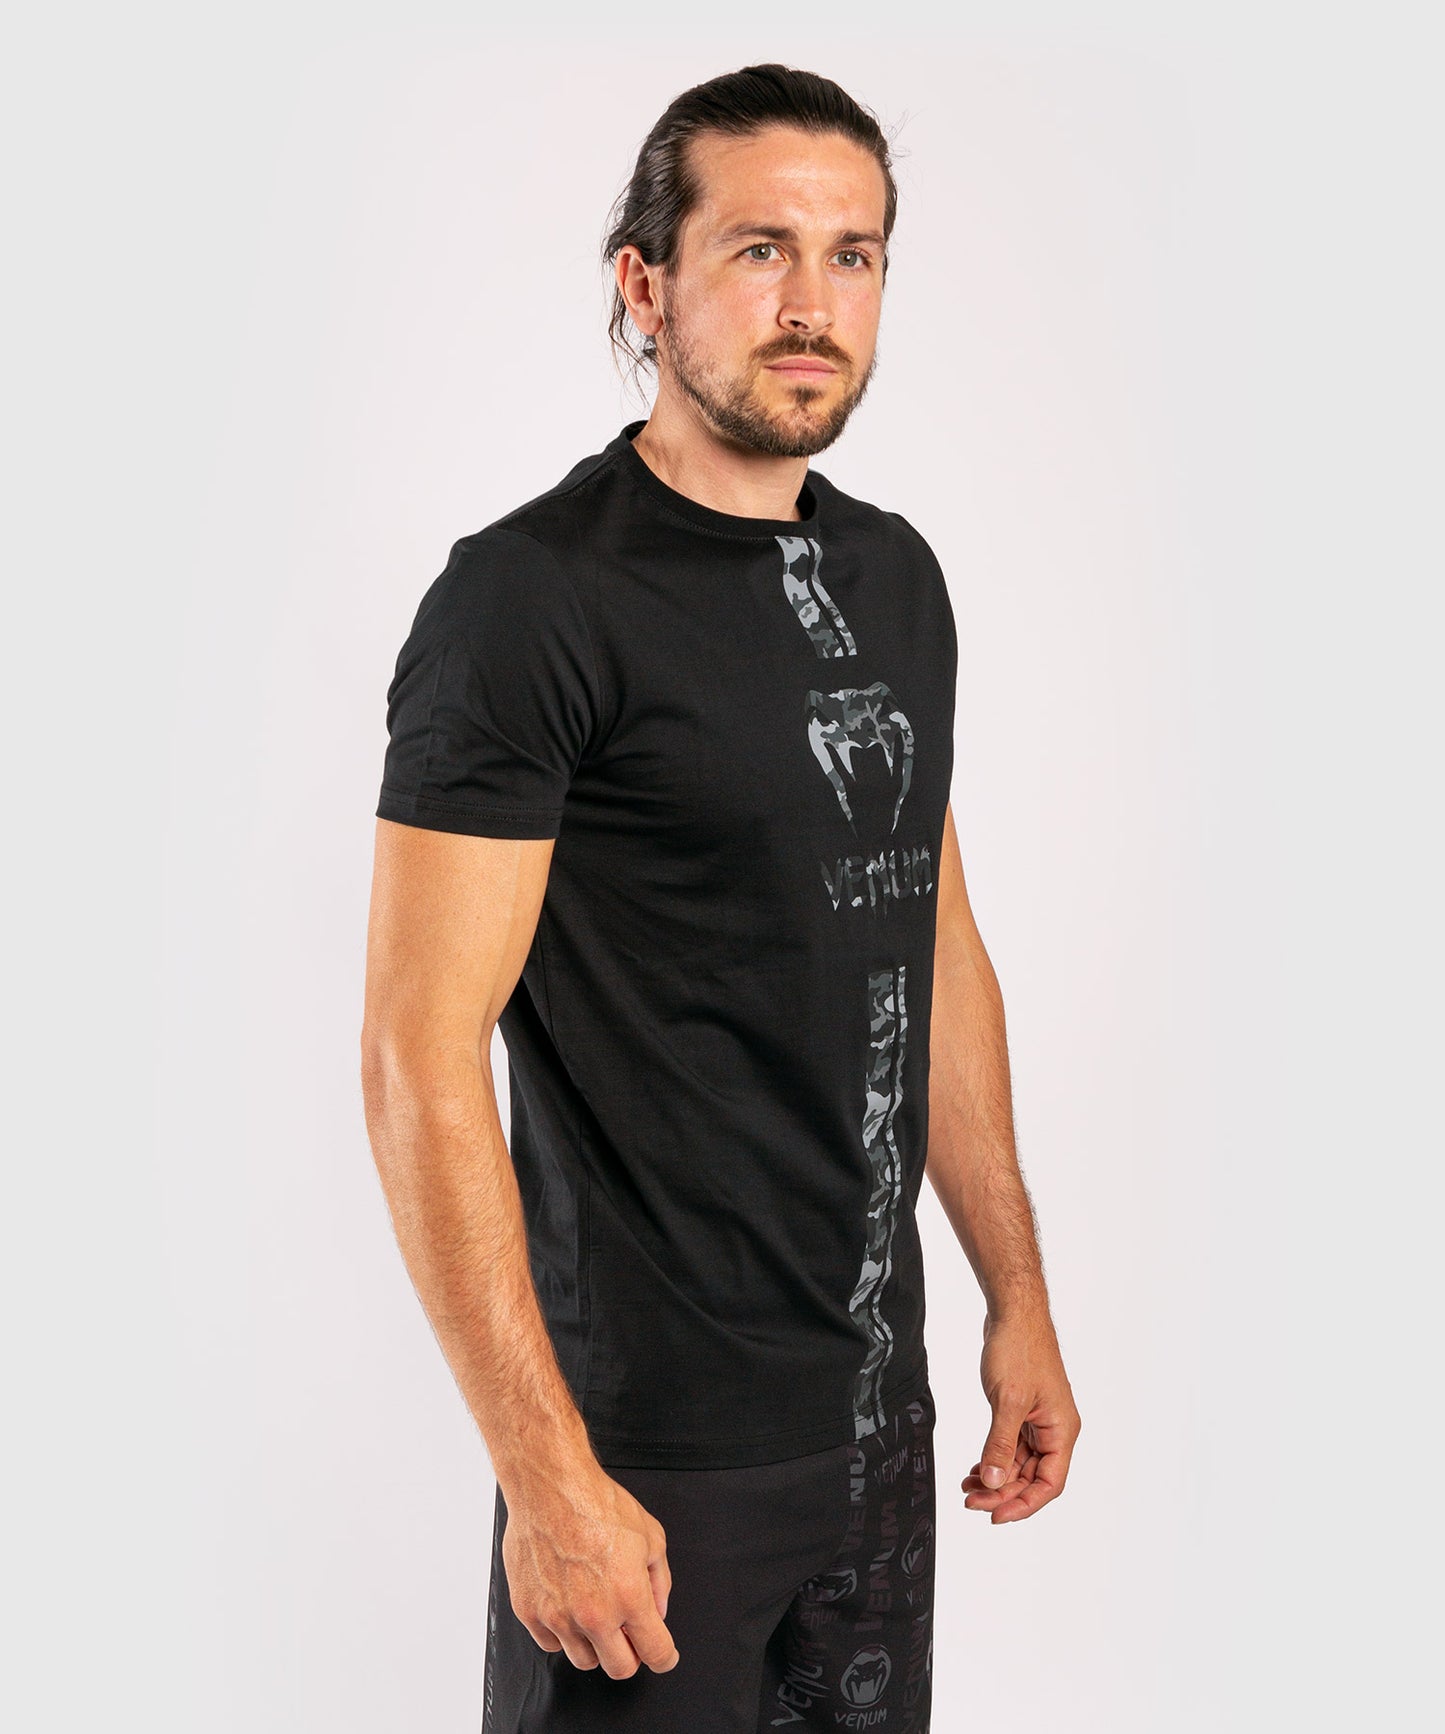 Venum Logos T-Shirt - Black/Urban camo